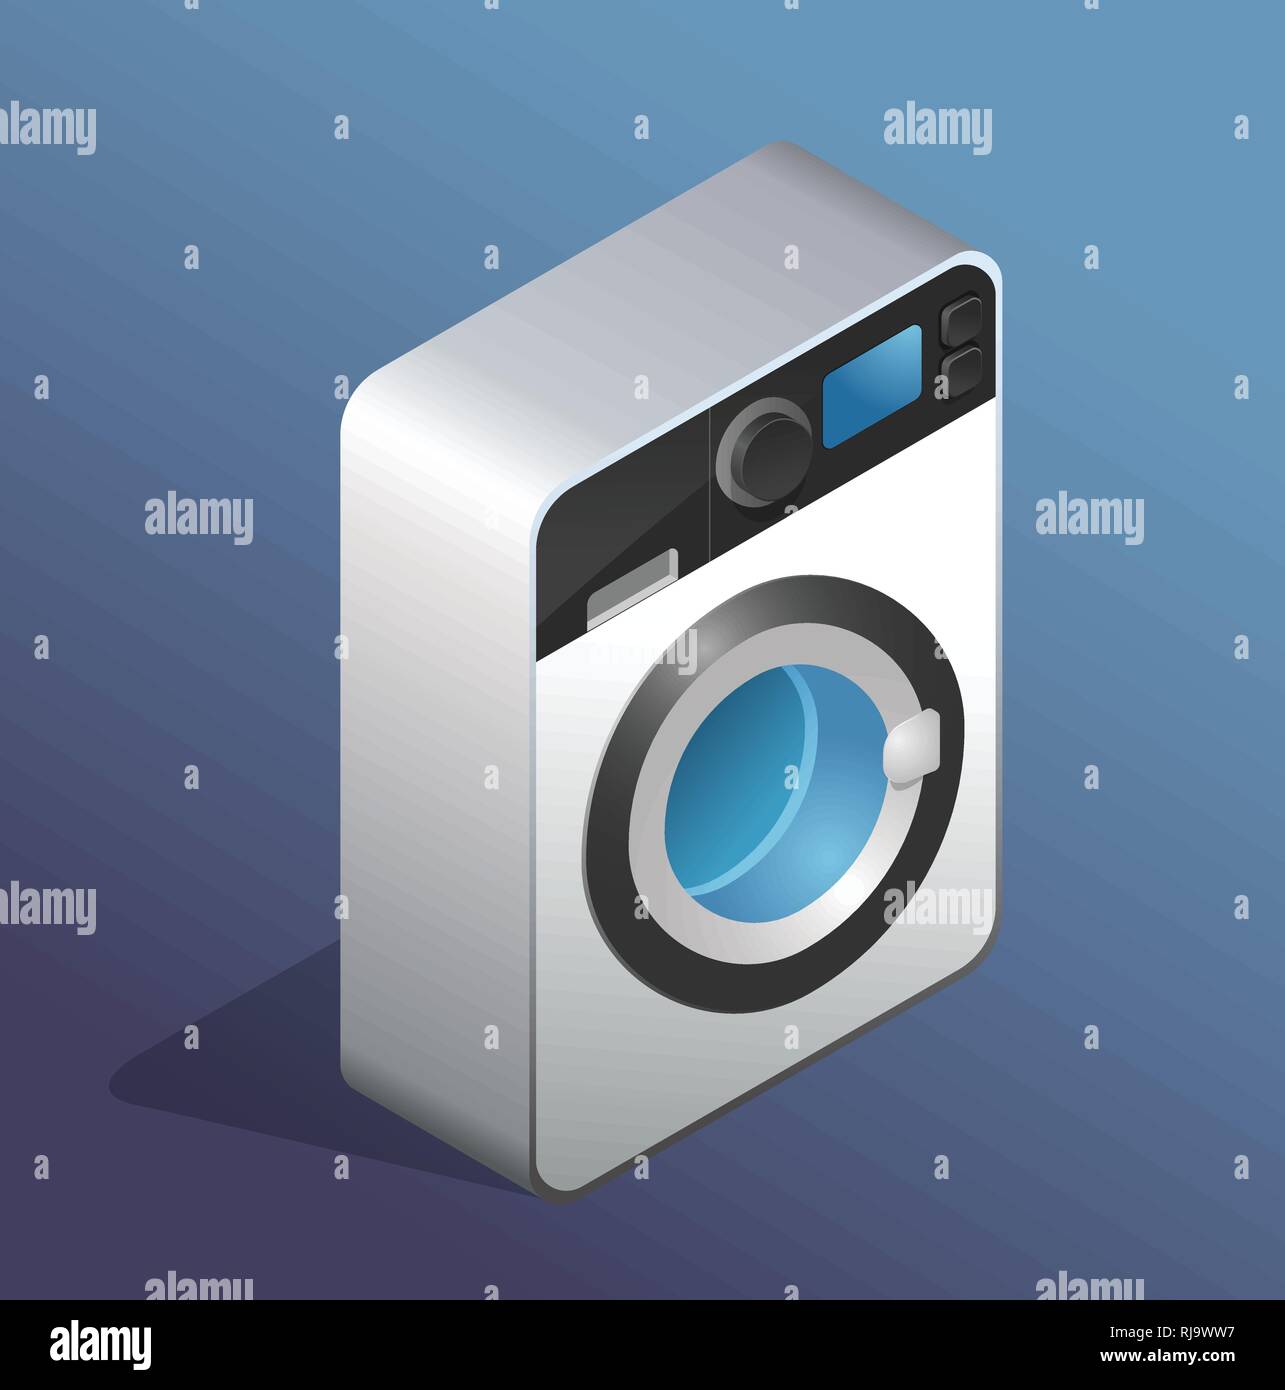 Isometric icon of washing machine Stock Vector